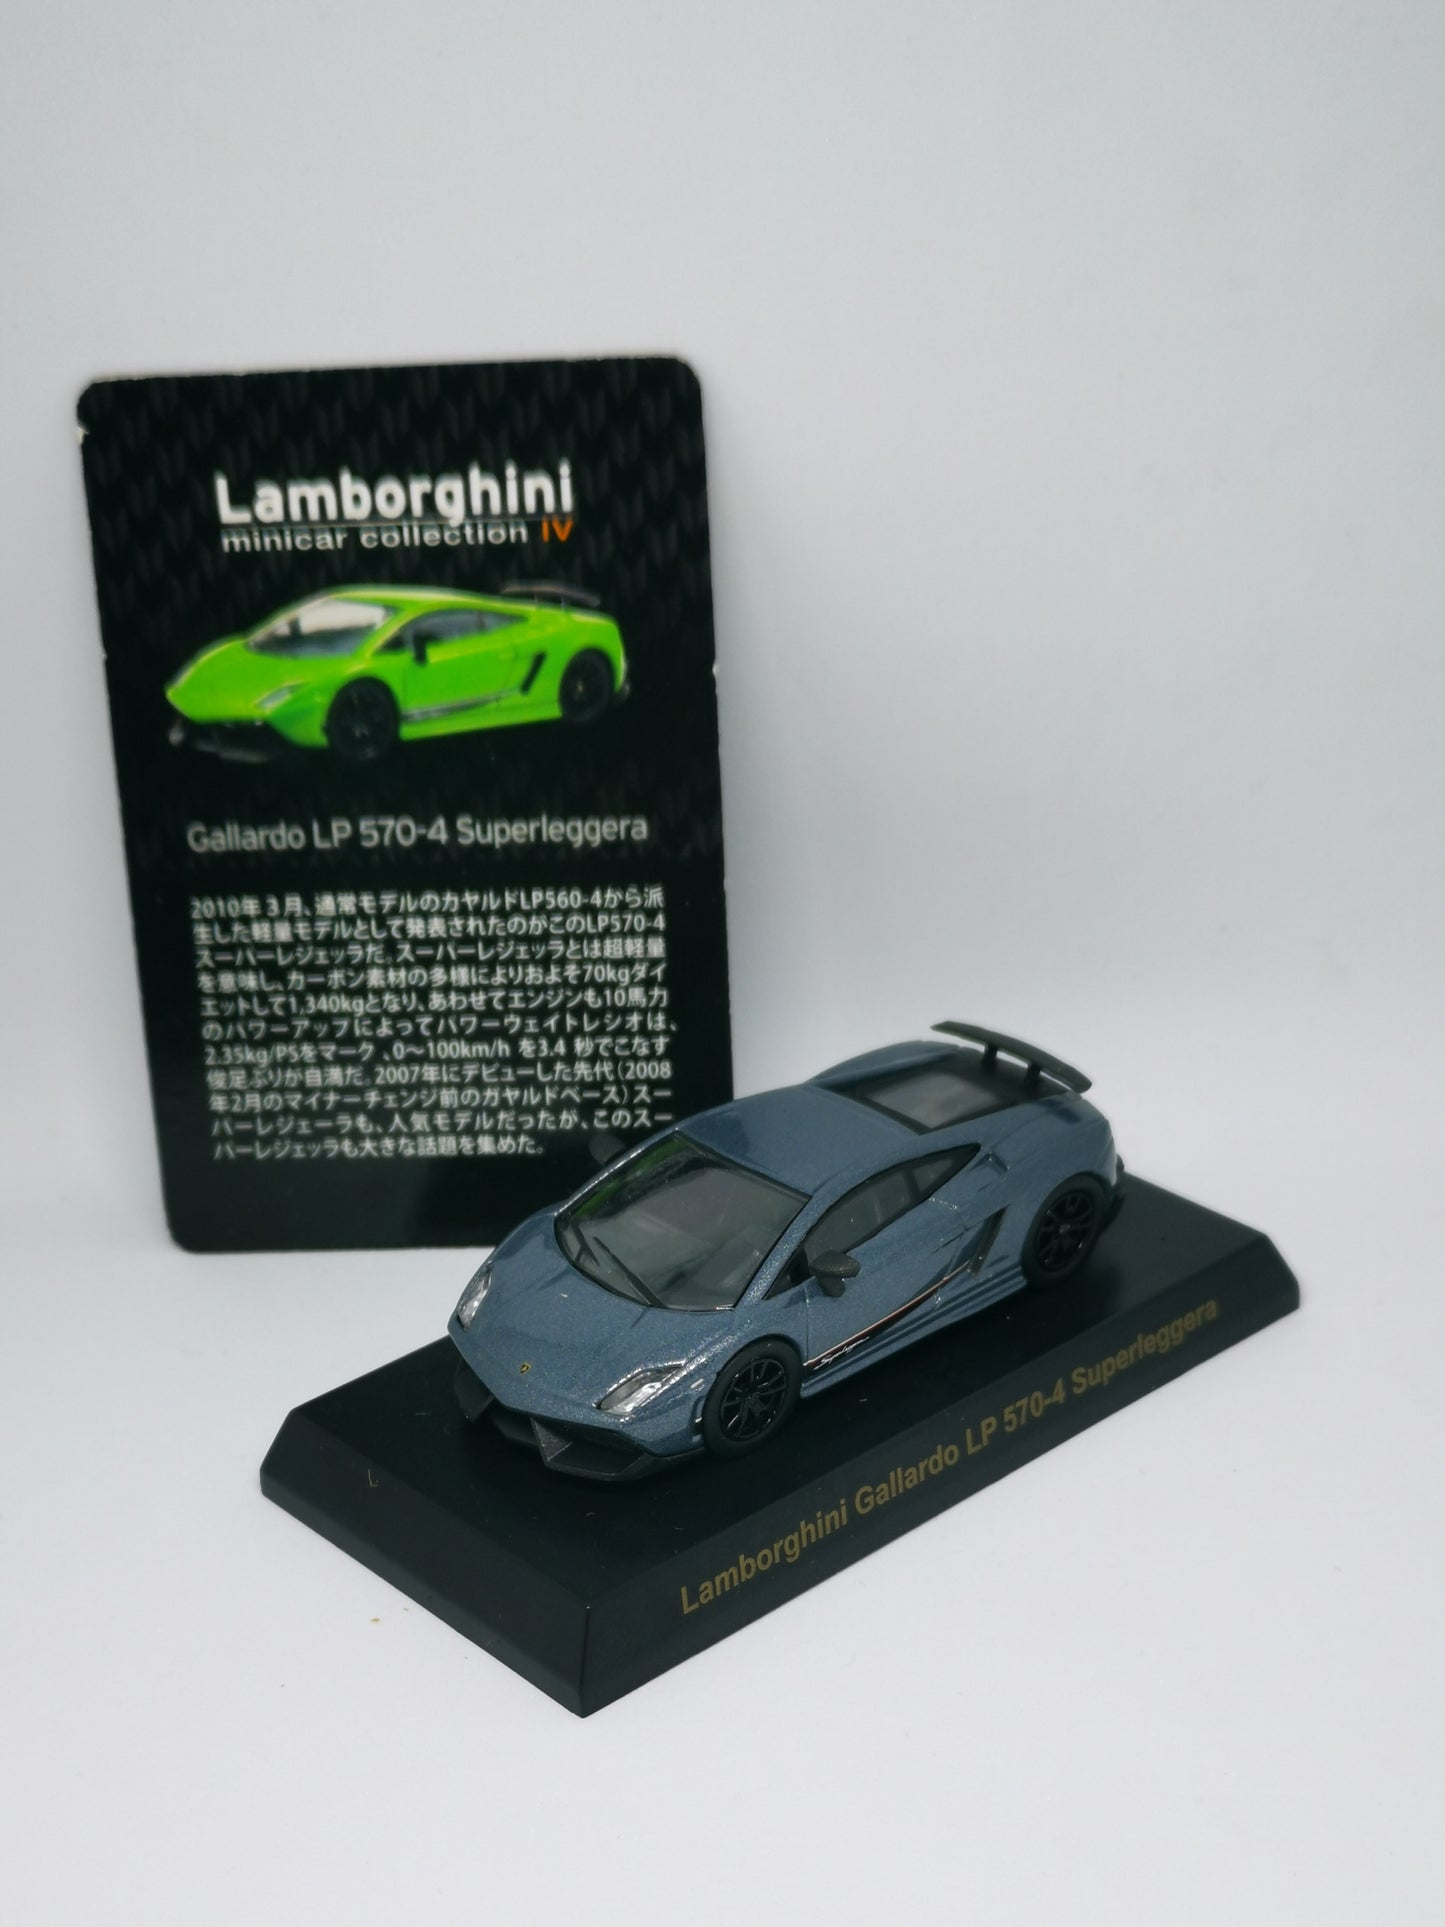 Kyosho 1:64 Scale Minicar Collection Lamborghini IV Lamborghini Gallardo LP570-4 Superleggera